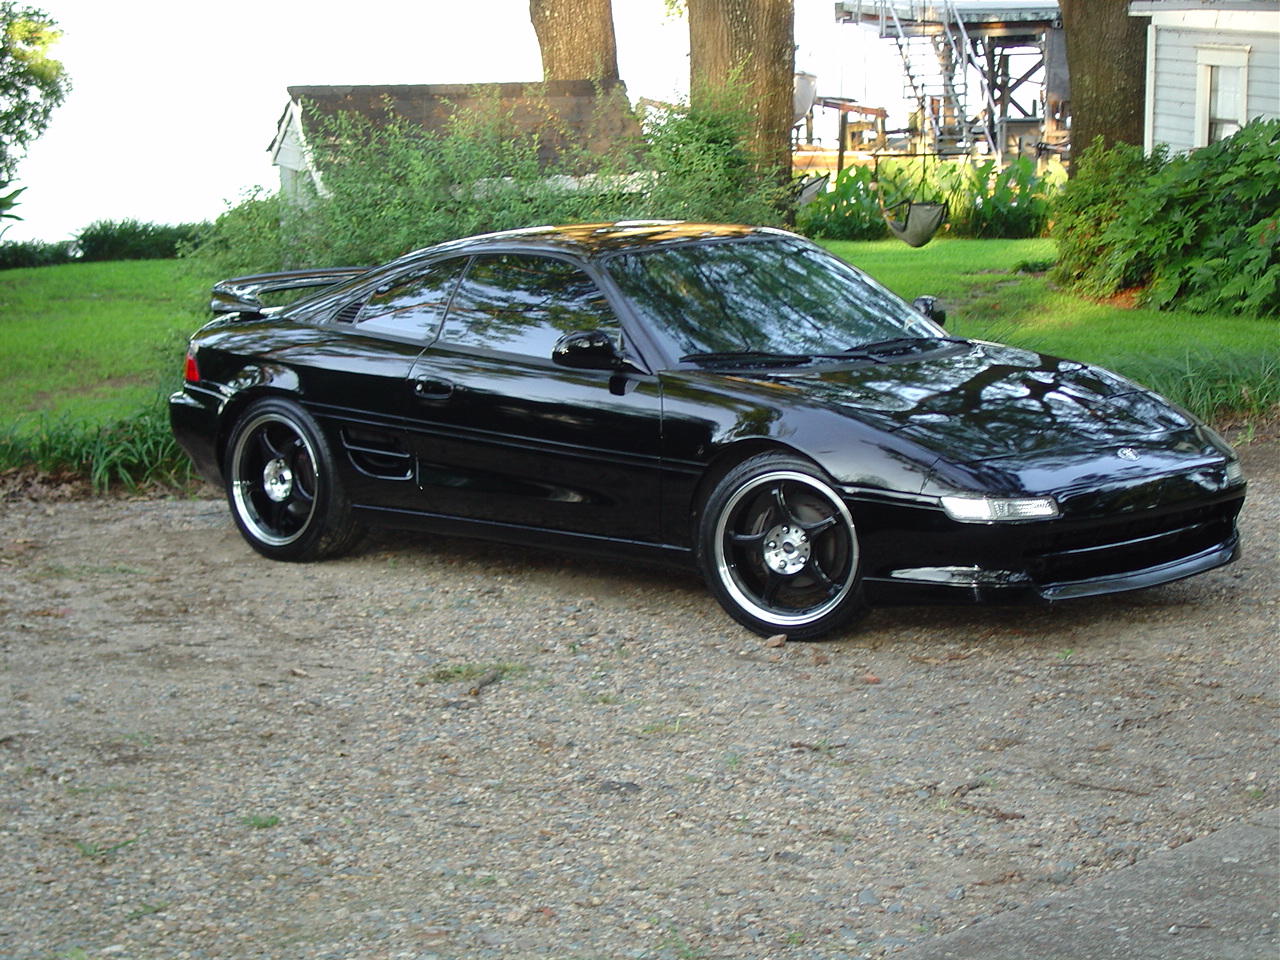  1993 Toyota MR2 Turbo